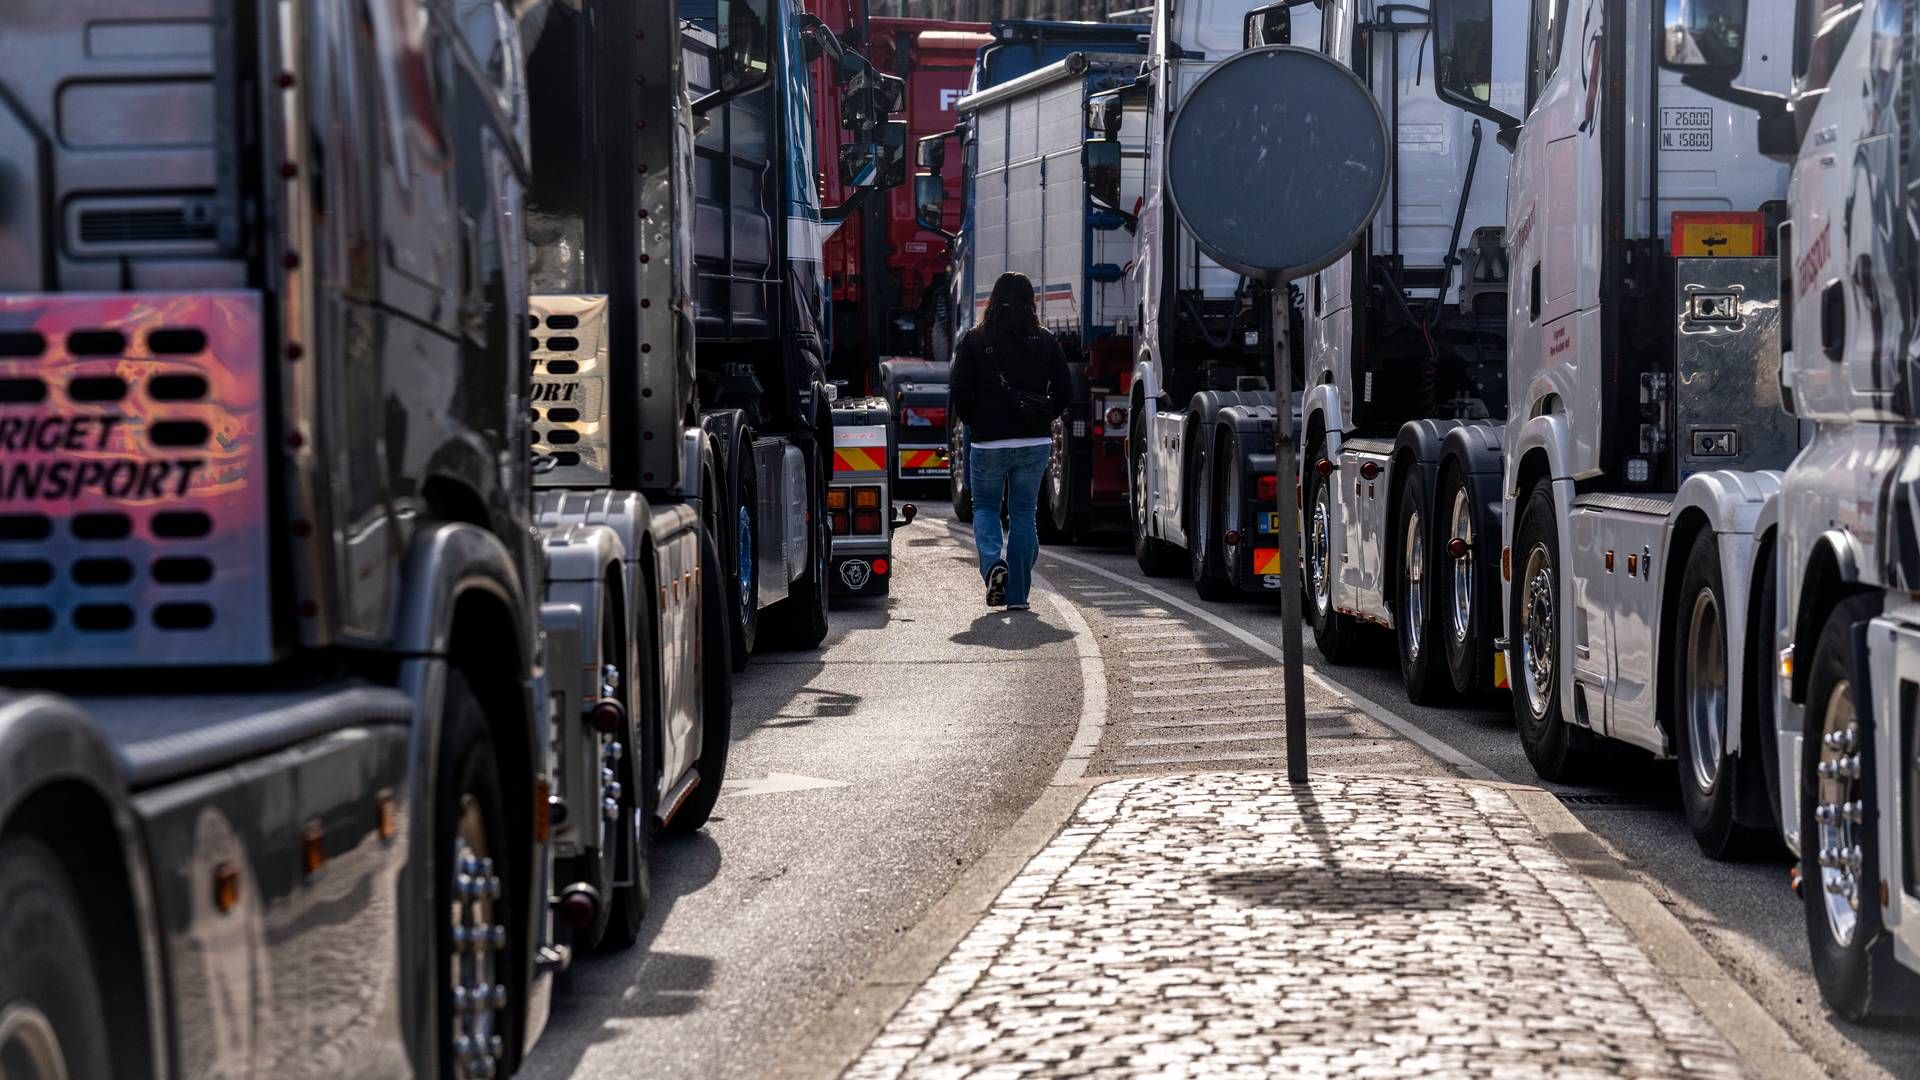 Over 400 lastbiler vil holde stille 1. maj, lyder det fra initiativtageren til nedlukningen. | Foto: Ida Marie Odgaard